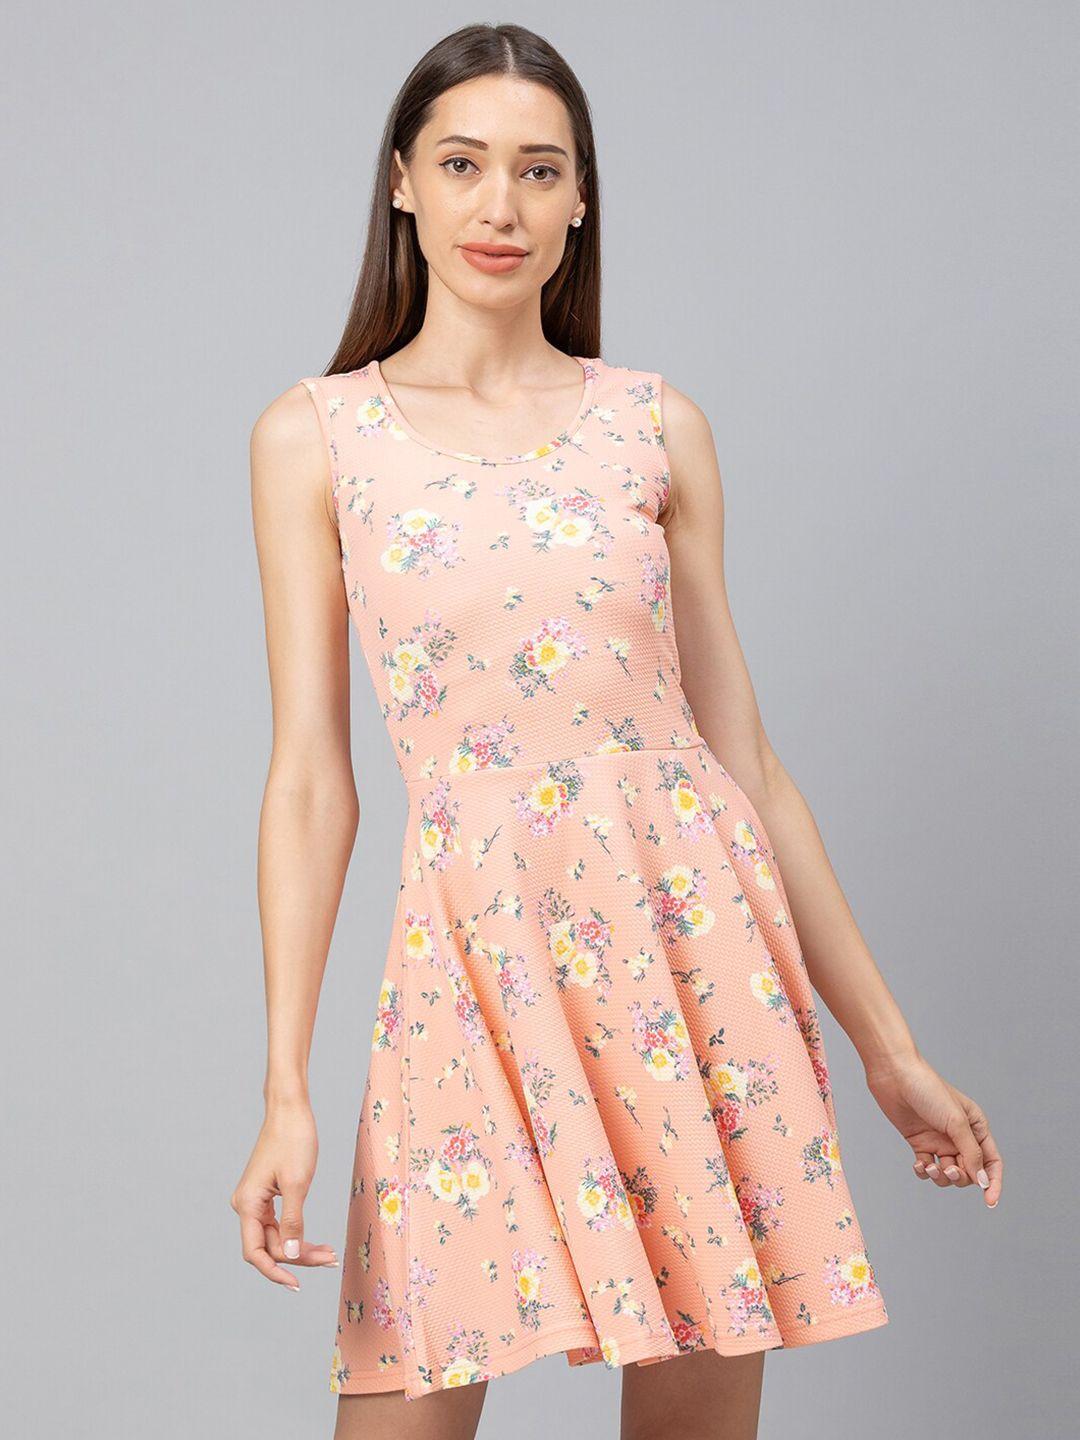 globus peach-coloured floral dress